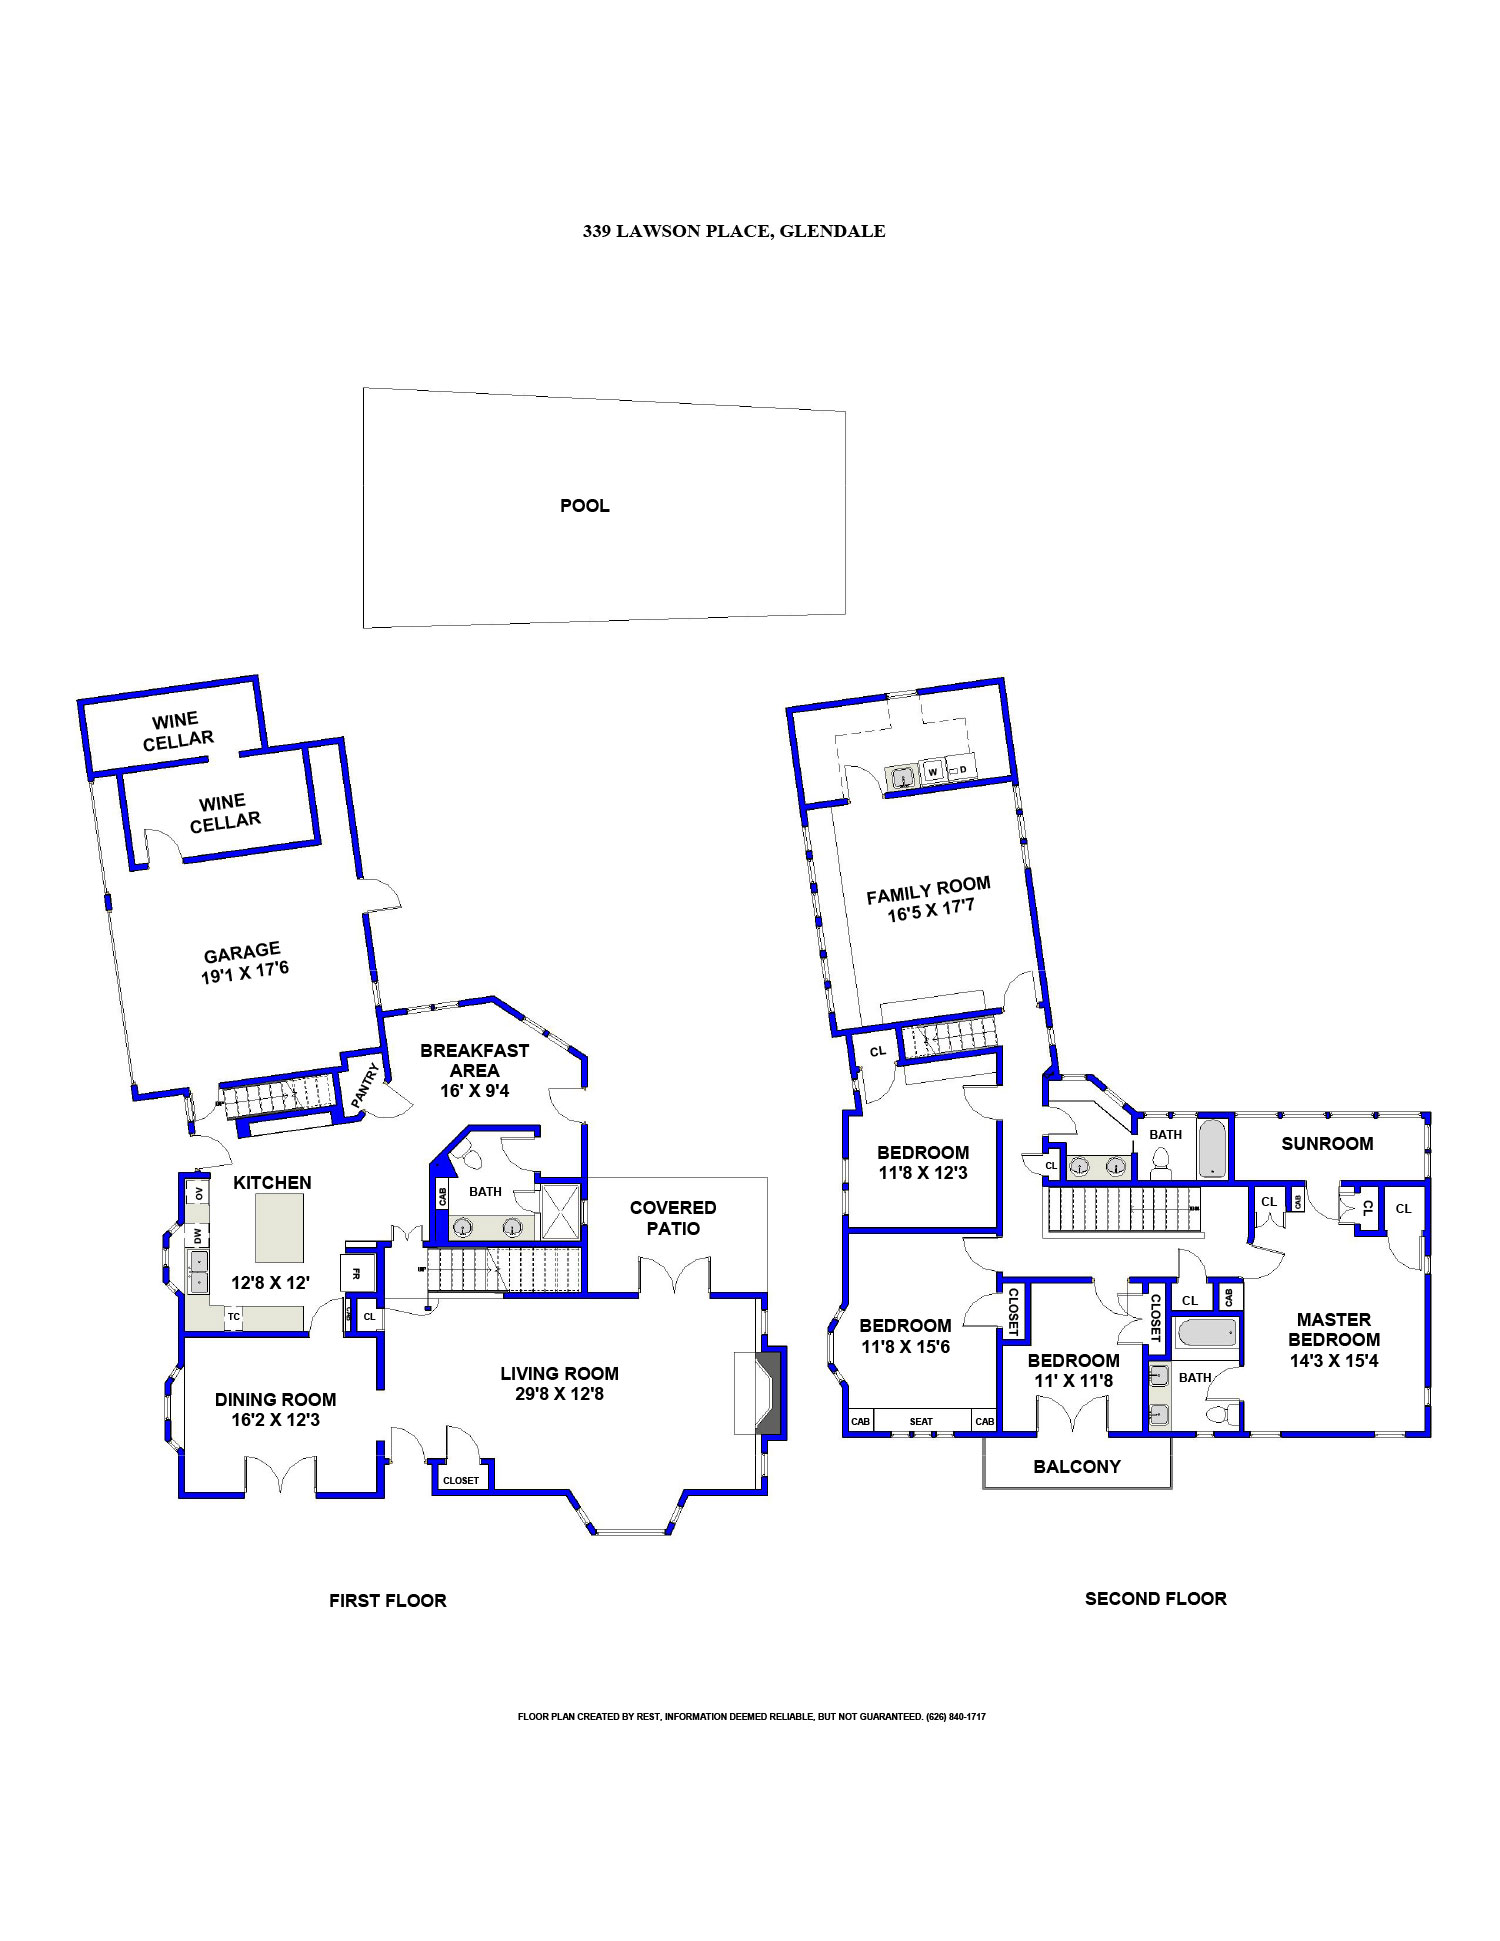 339 Lawson Place Floor Plan